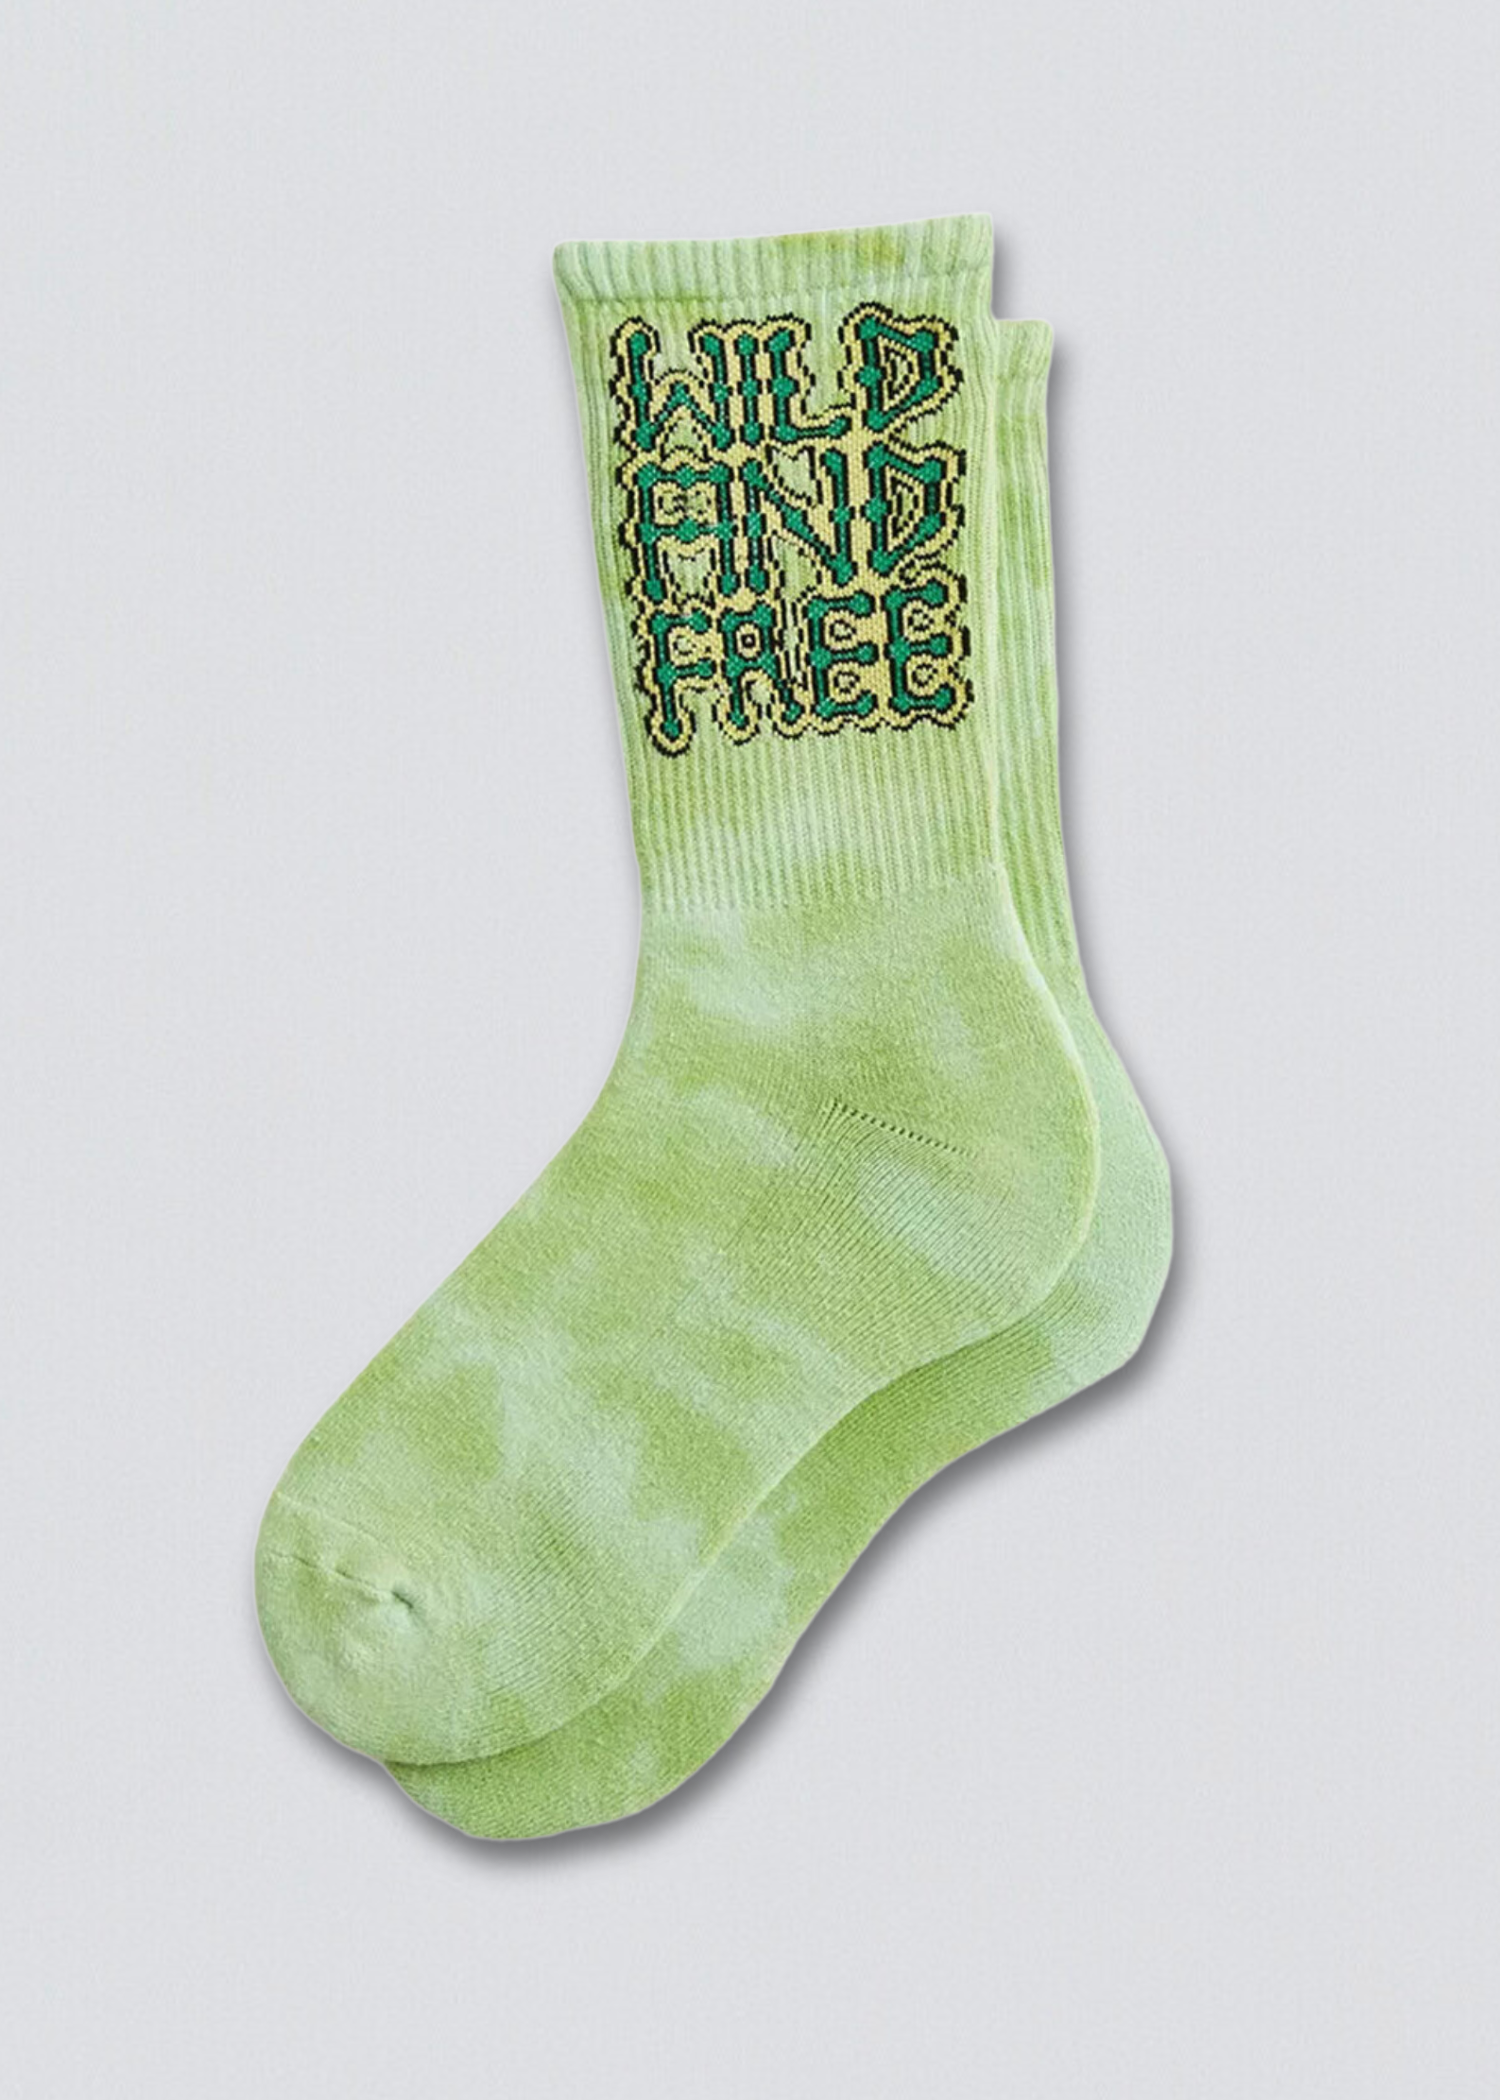 Wild and Free Socks